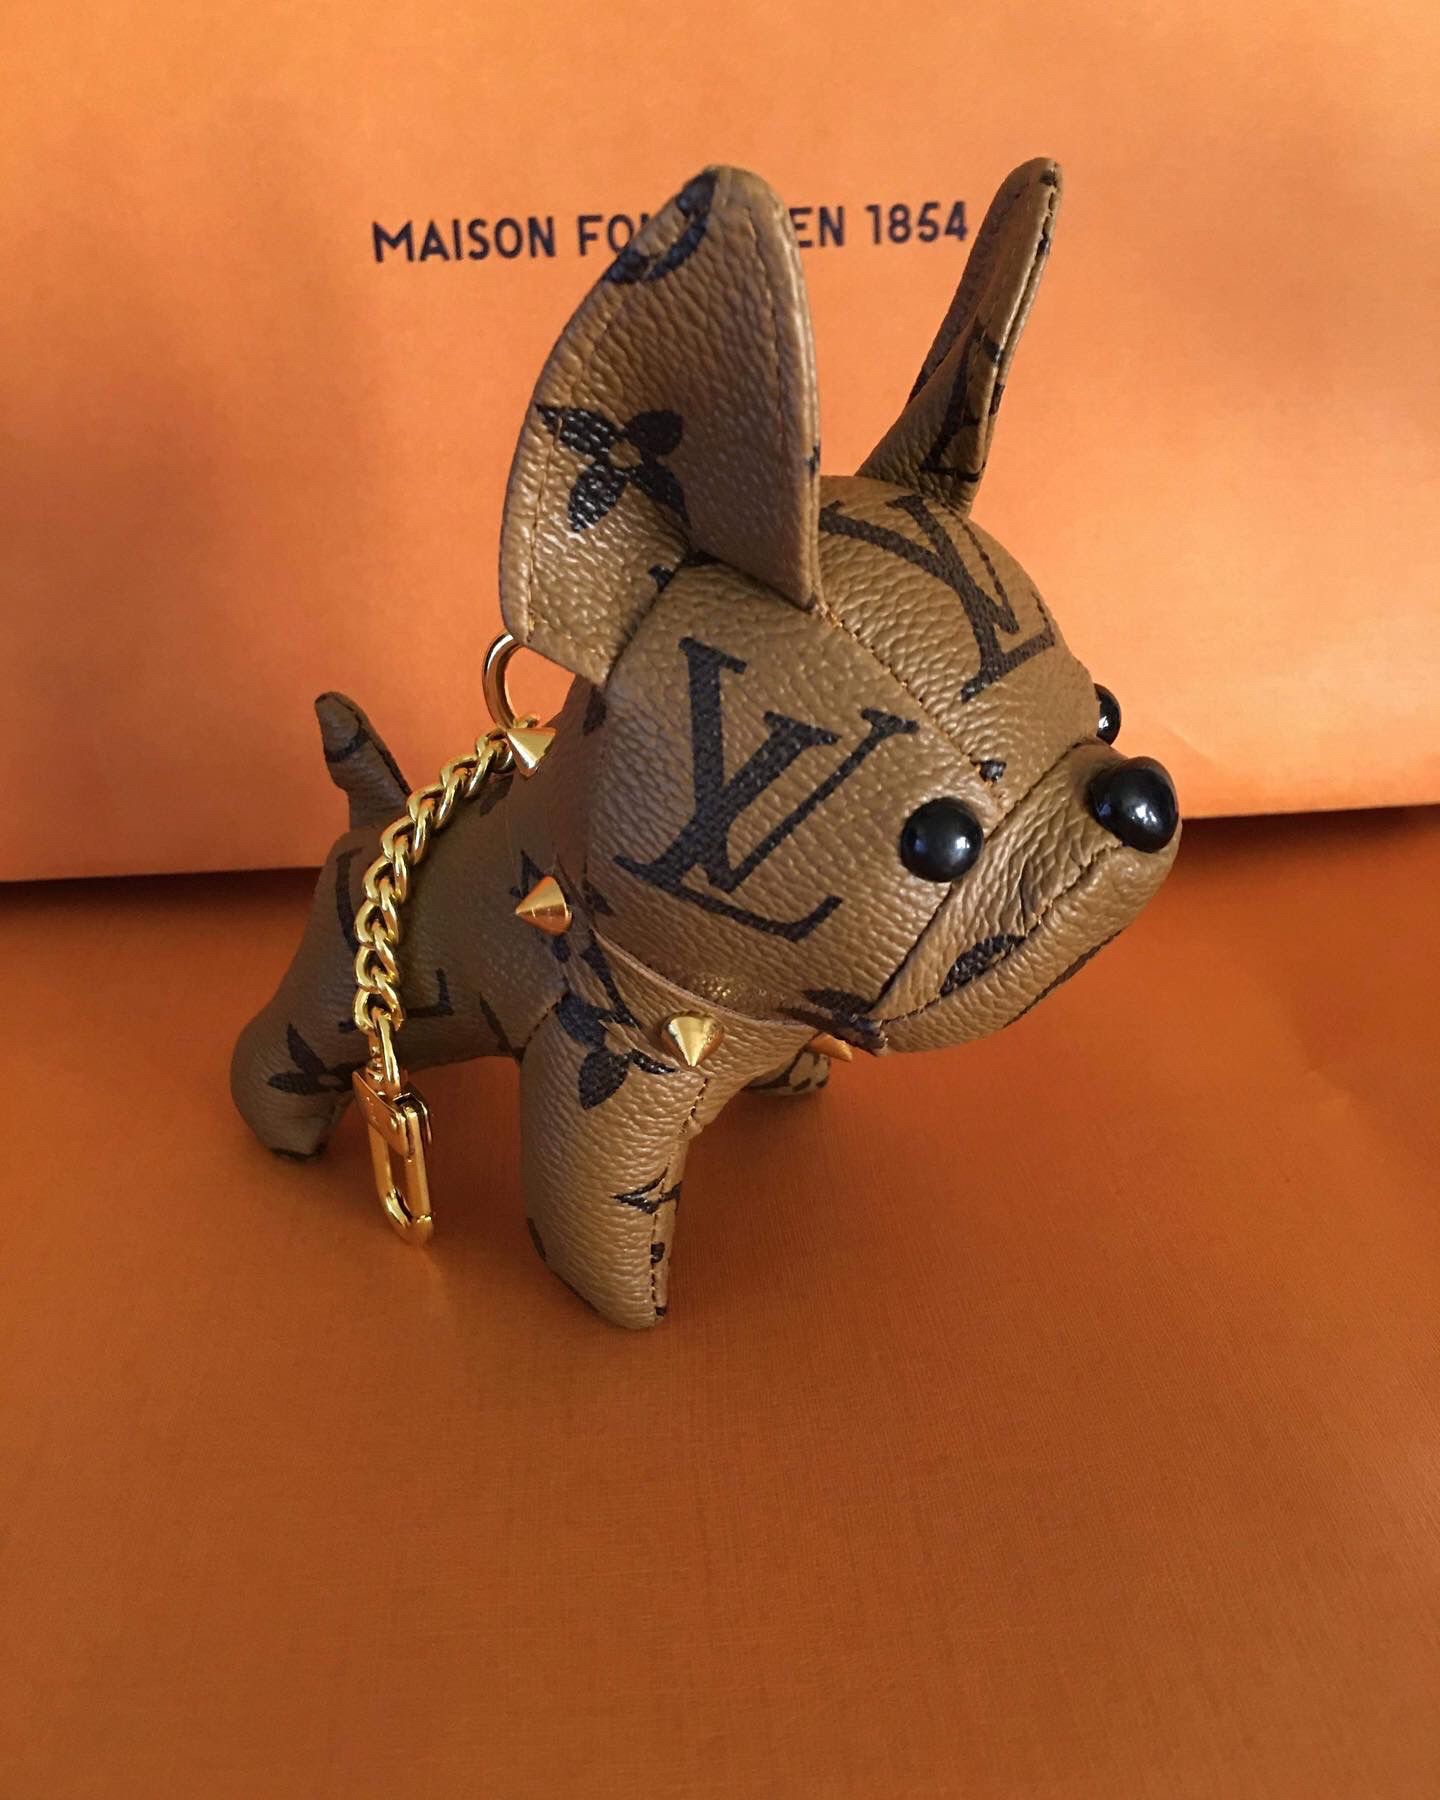 LV French Bulldog Keychain / Bag Charm